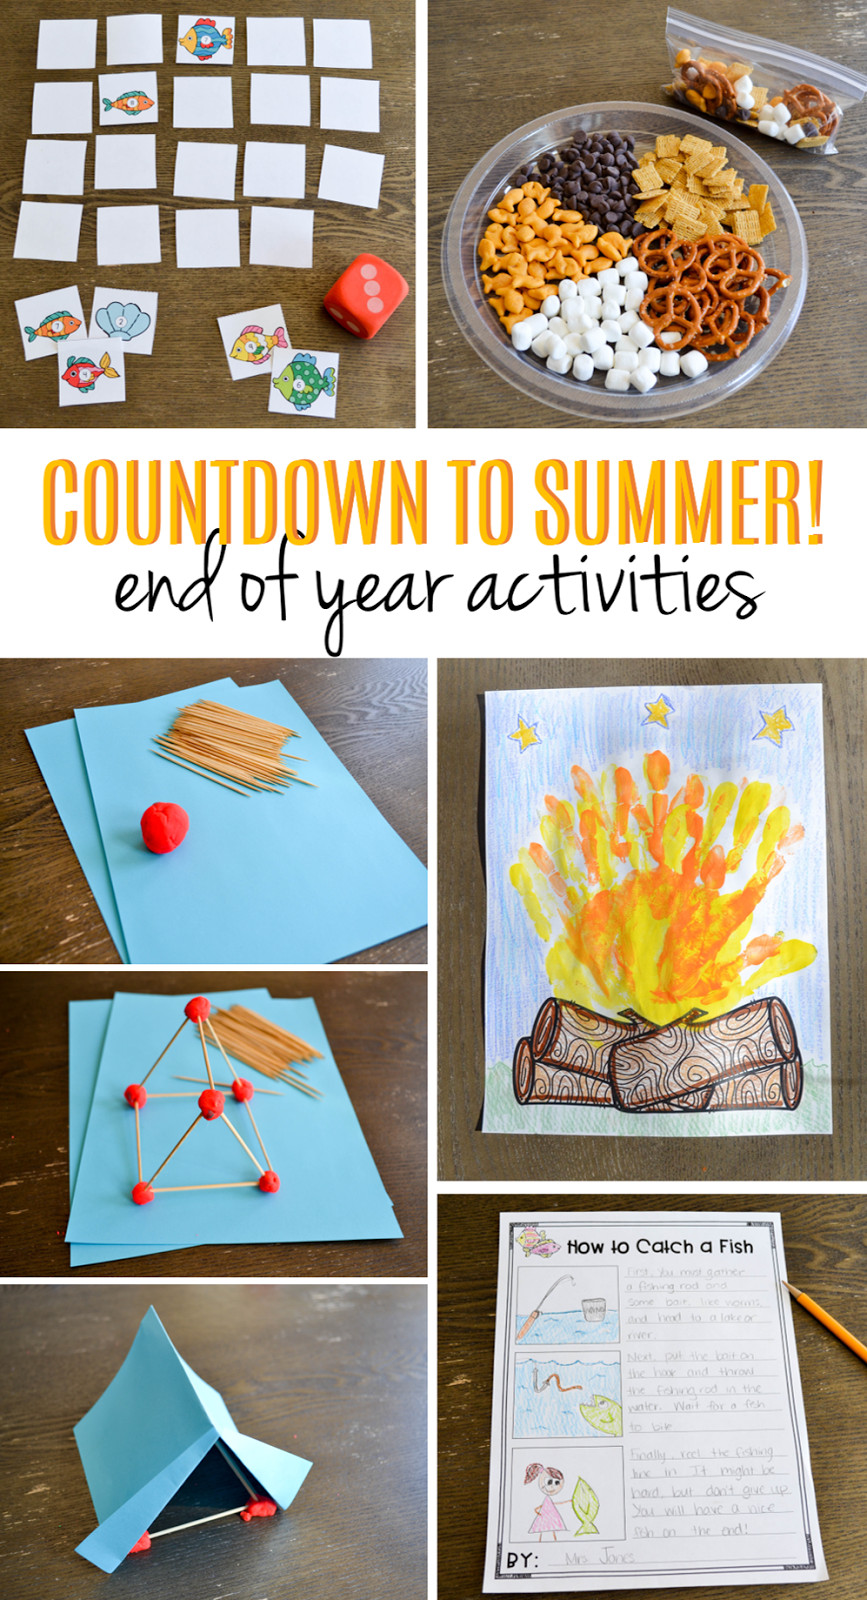 End Of Summer Crafts For Preschoolers
 Countdown to Summer End of Year Activities Susan Jones